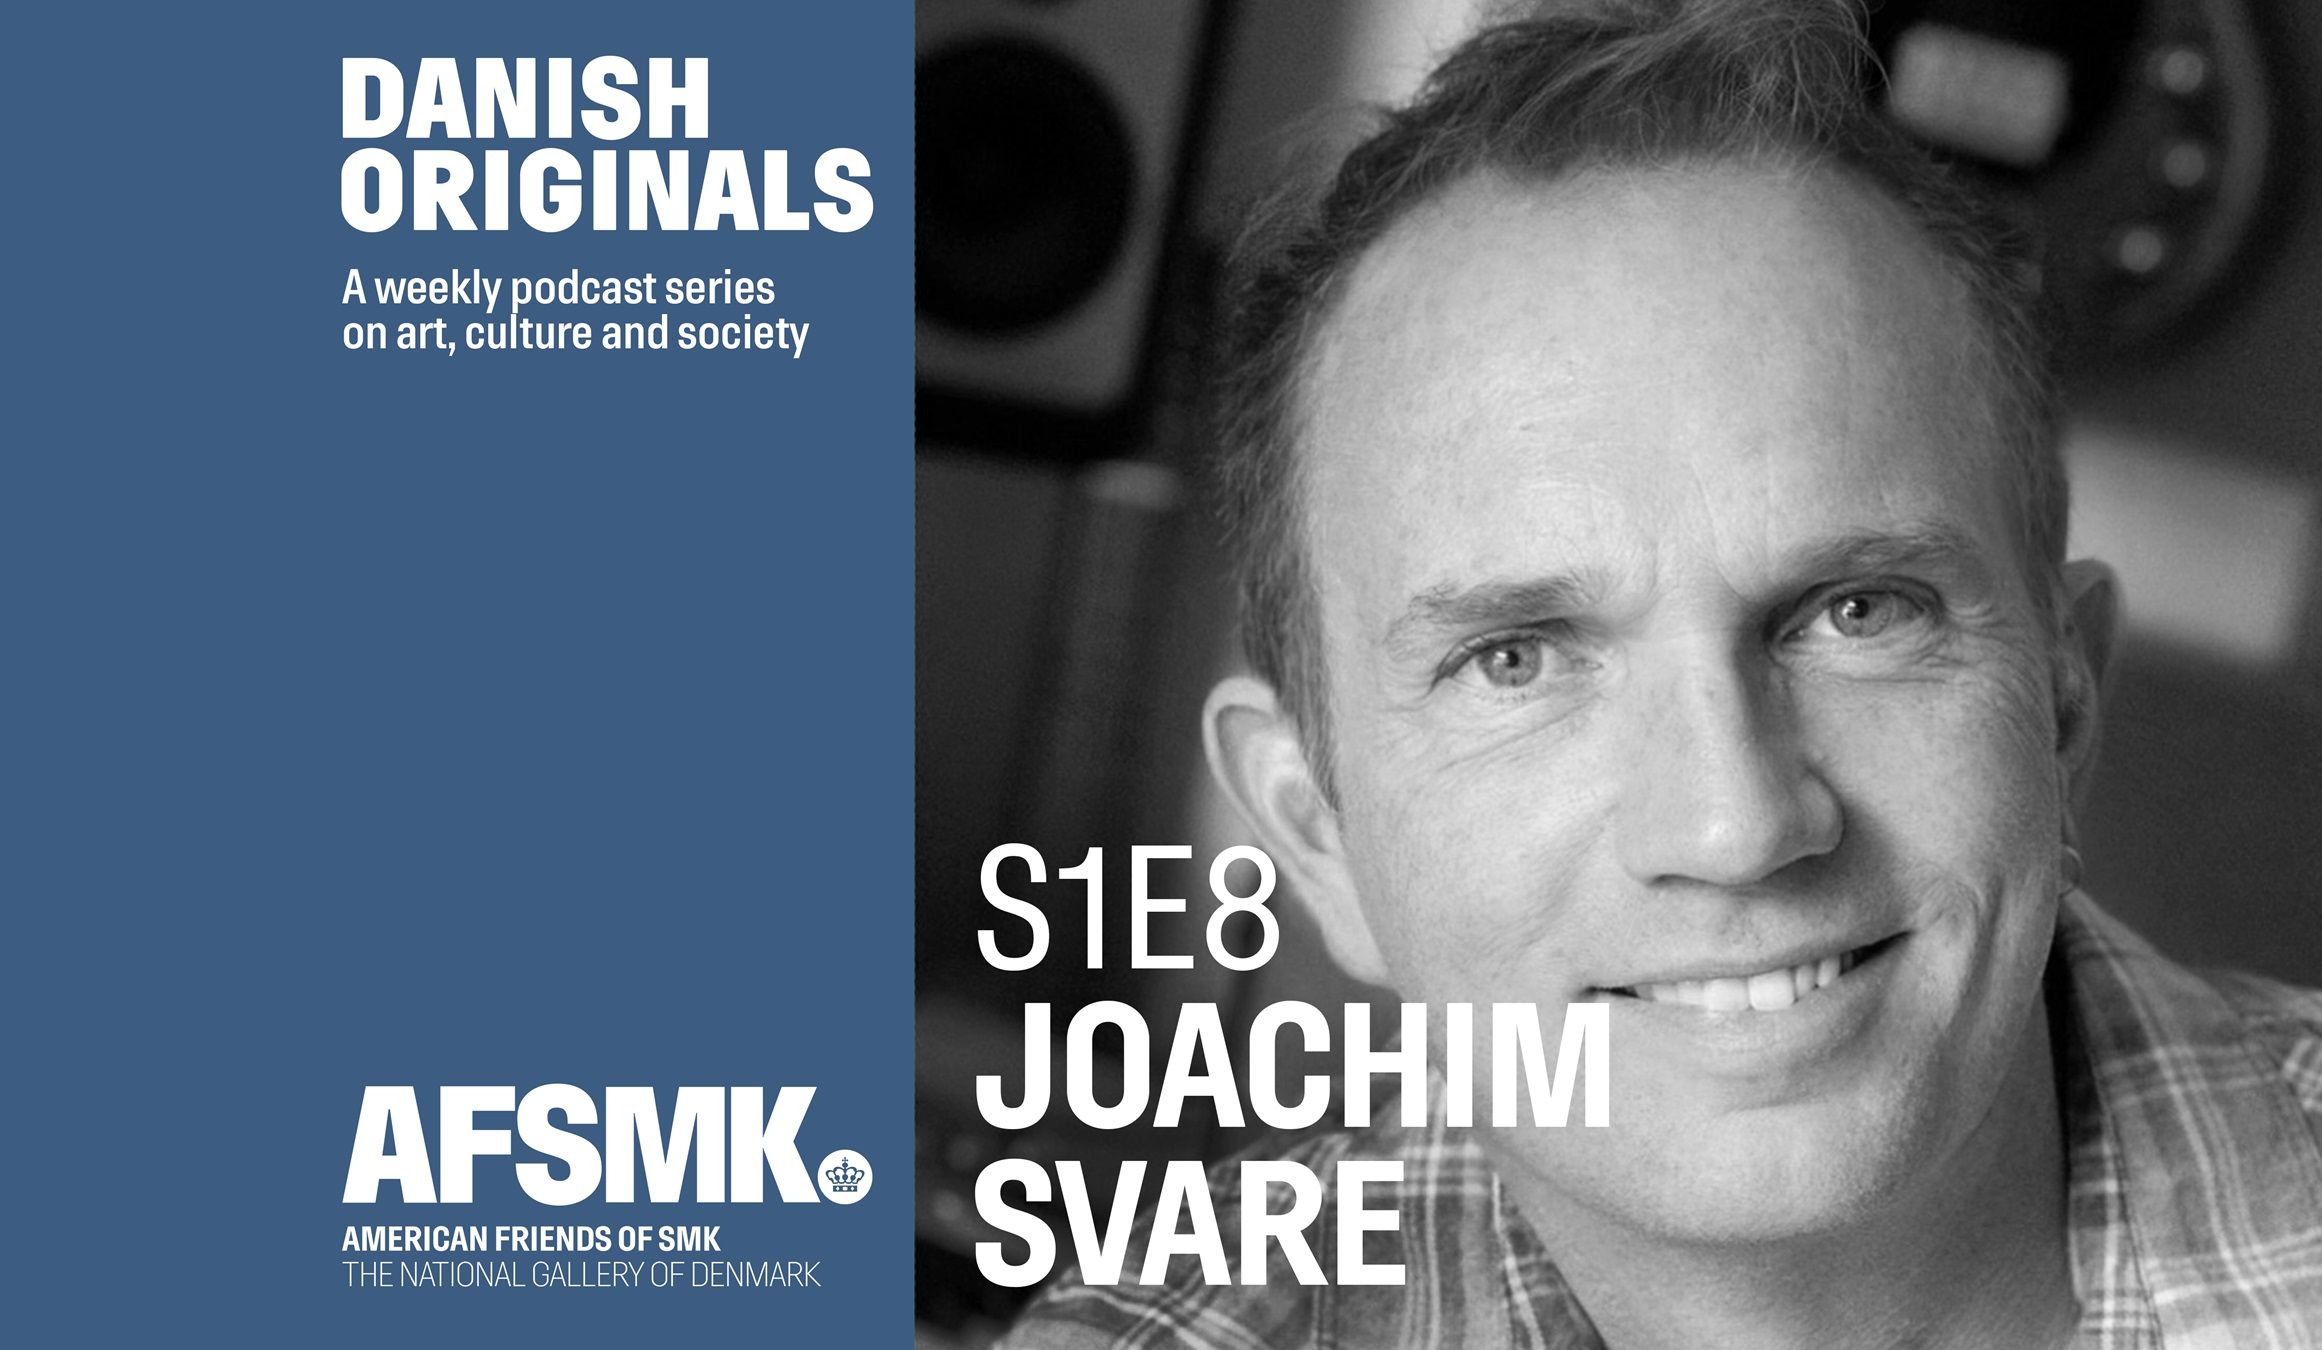 Danish Originals S1 E8: Joachim Svare